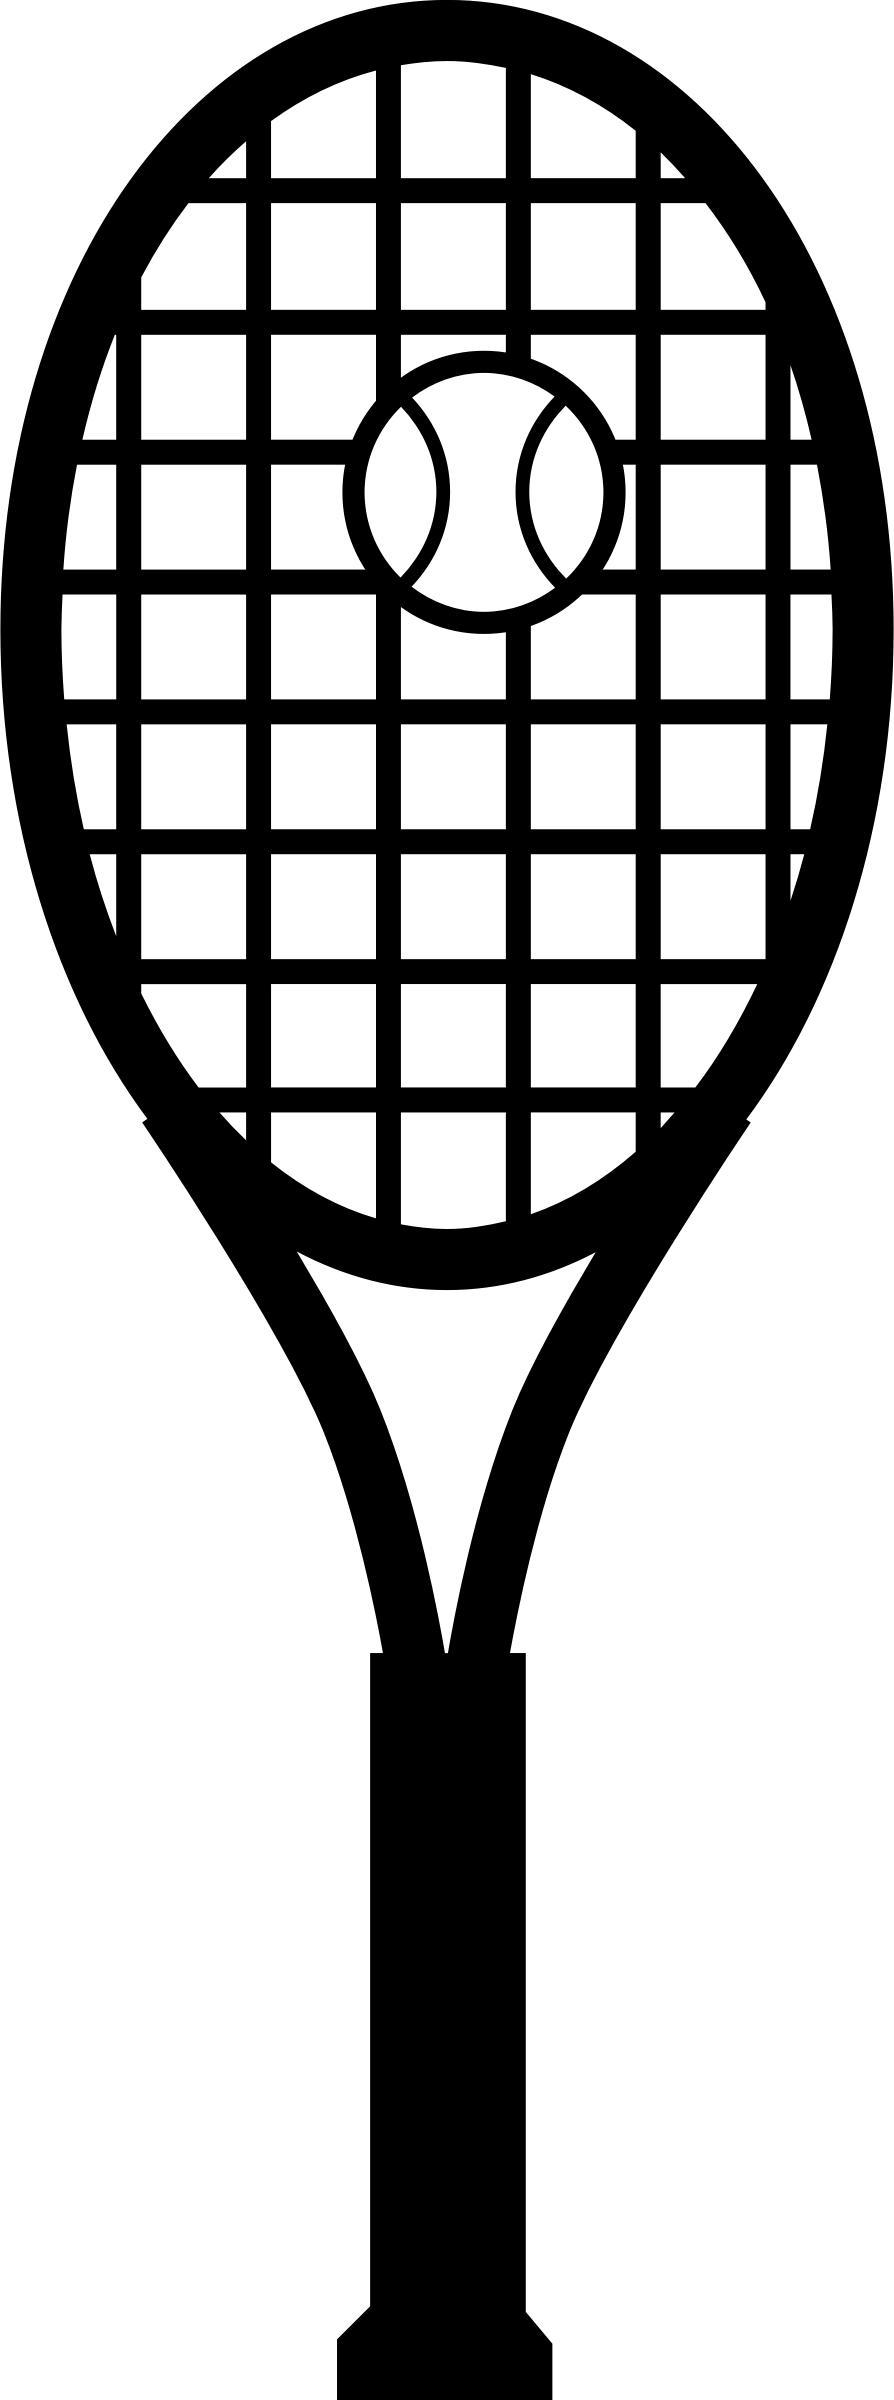 tennis racket and ball png transparent